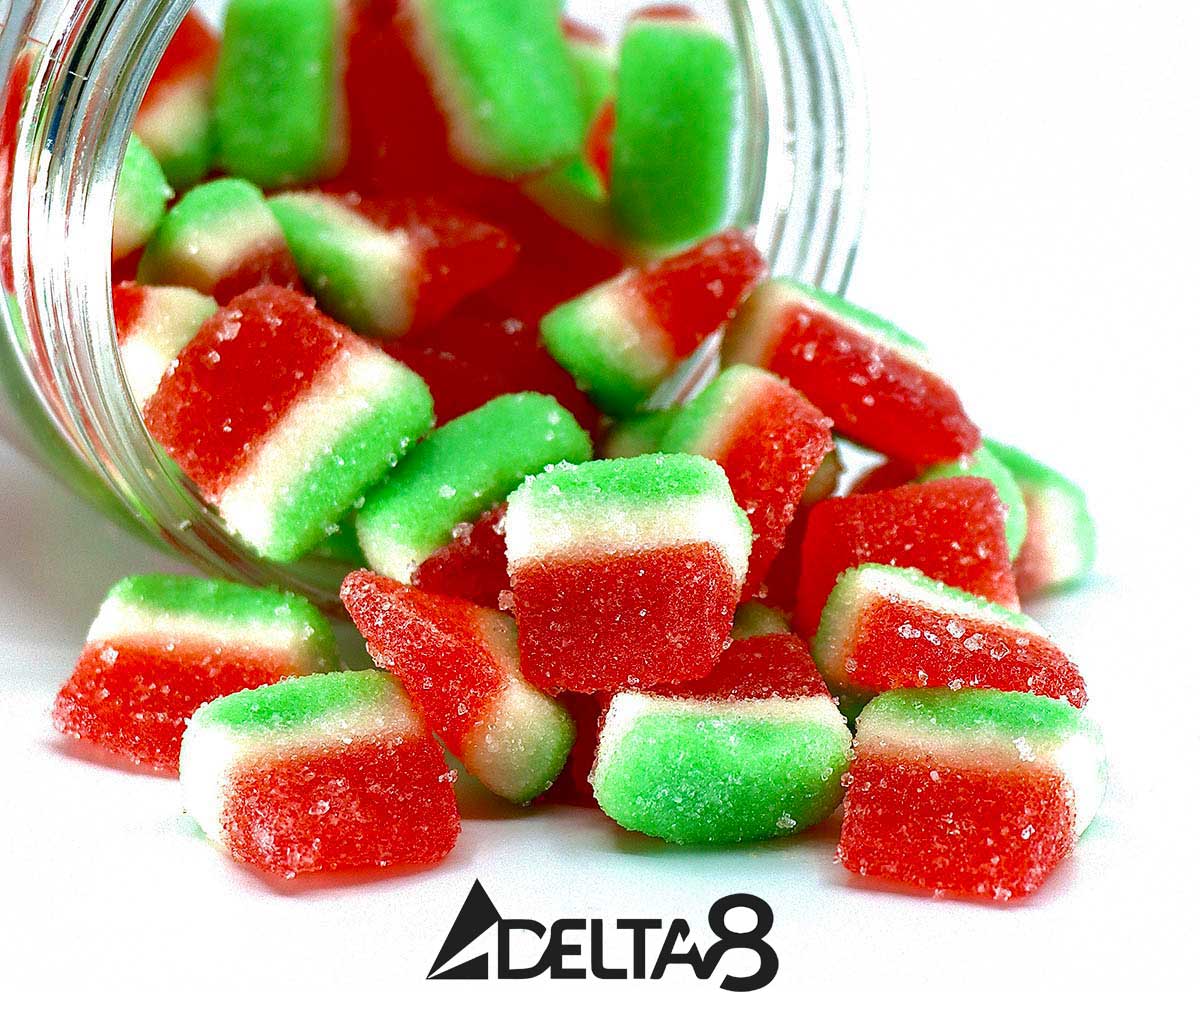 Watermelon Rush Delta-8 Gummies D8